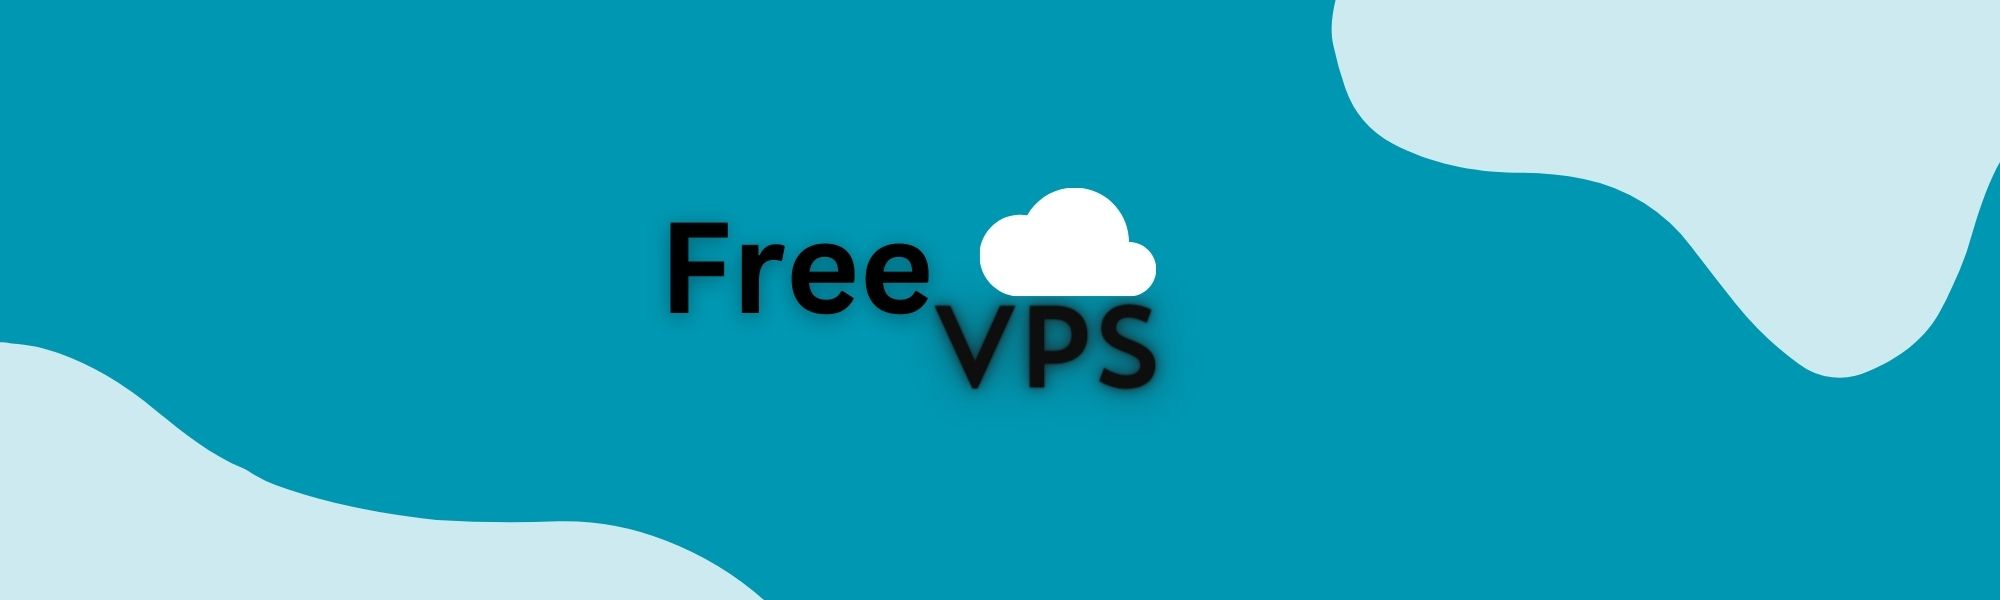 free vps